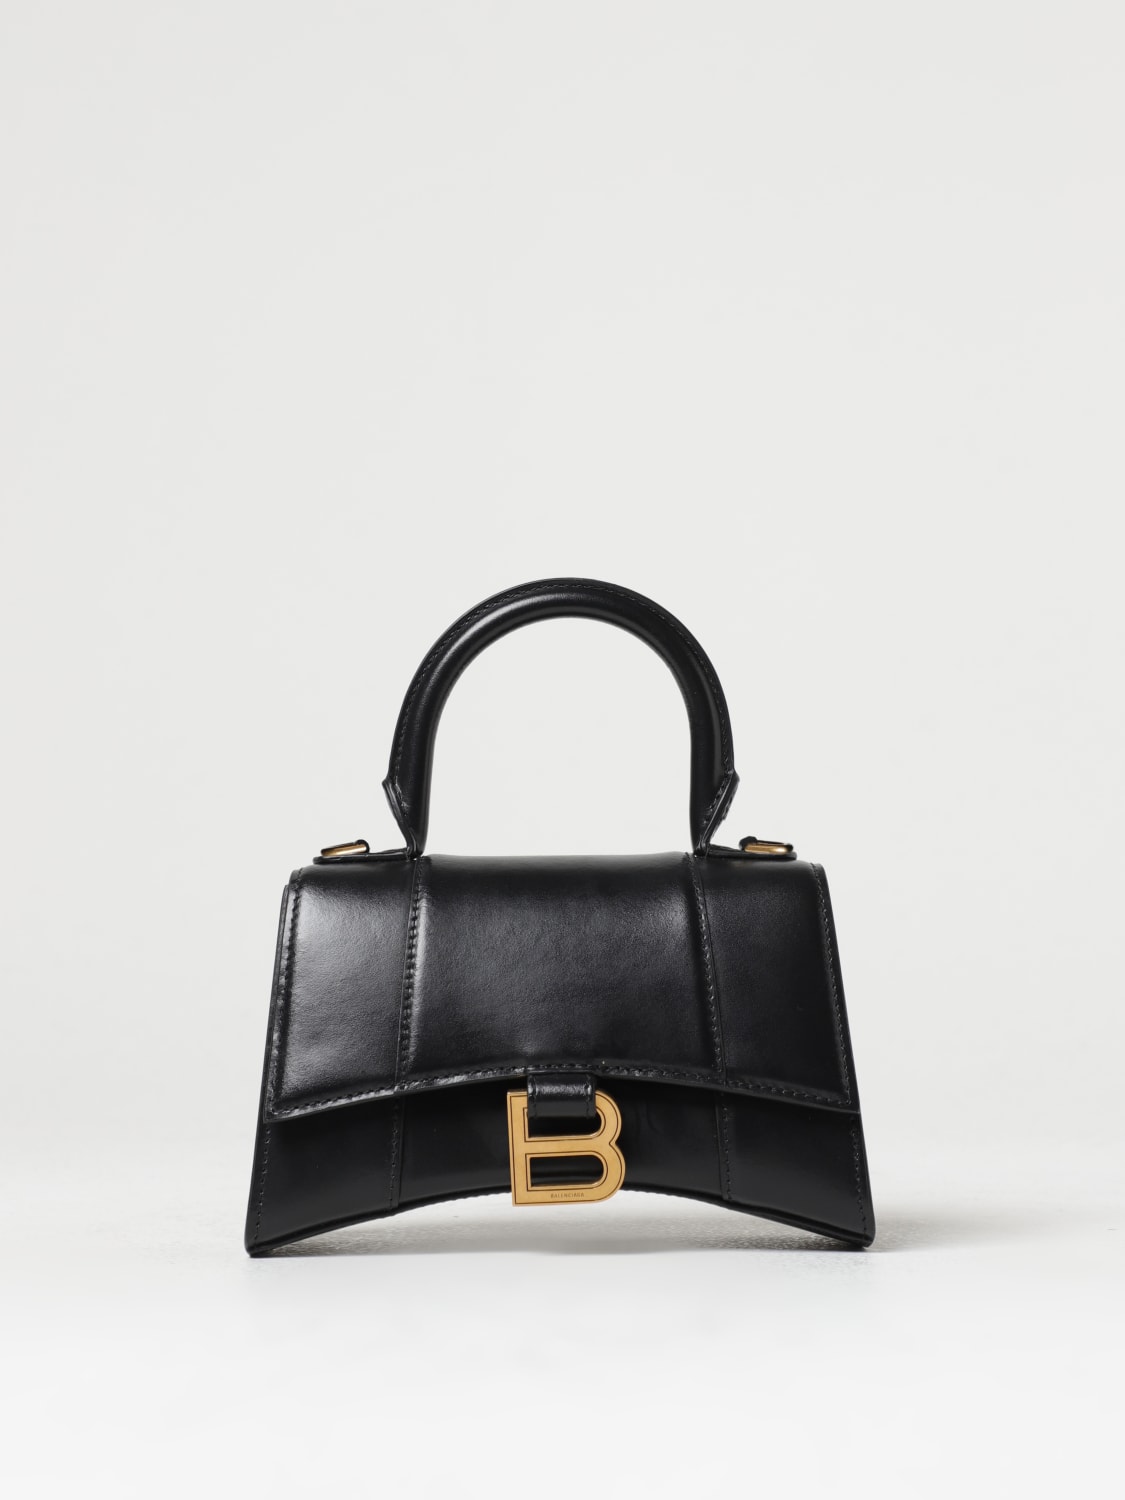 BALENCIAGA: Hourglass XS bag in leather - Black | Balenciaga mini bag ...